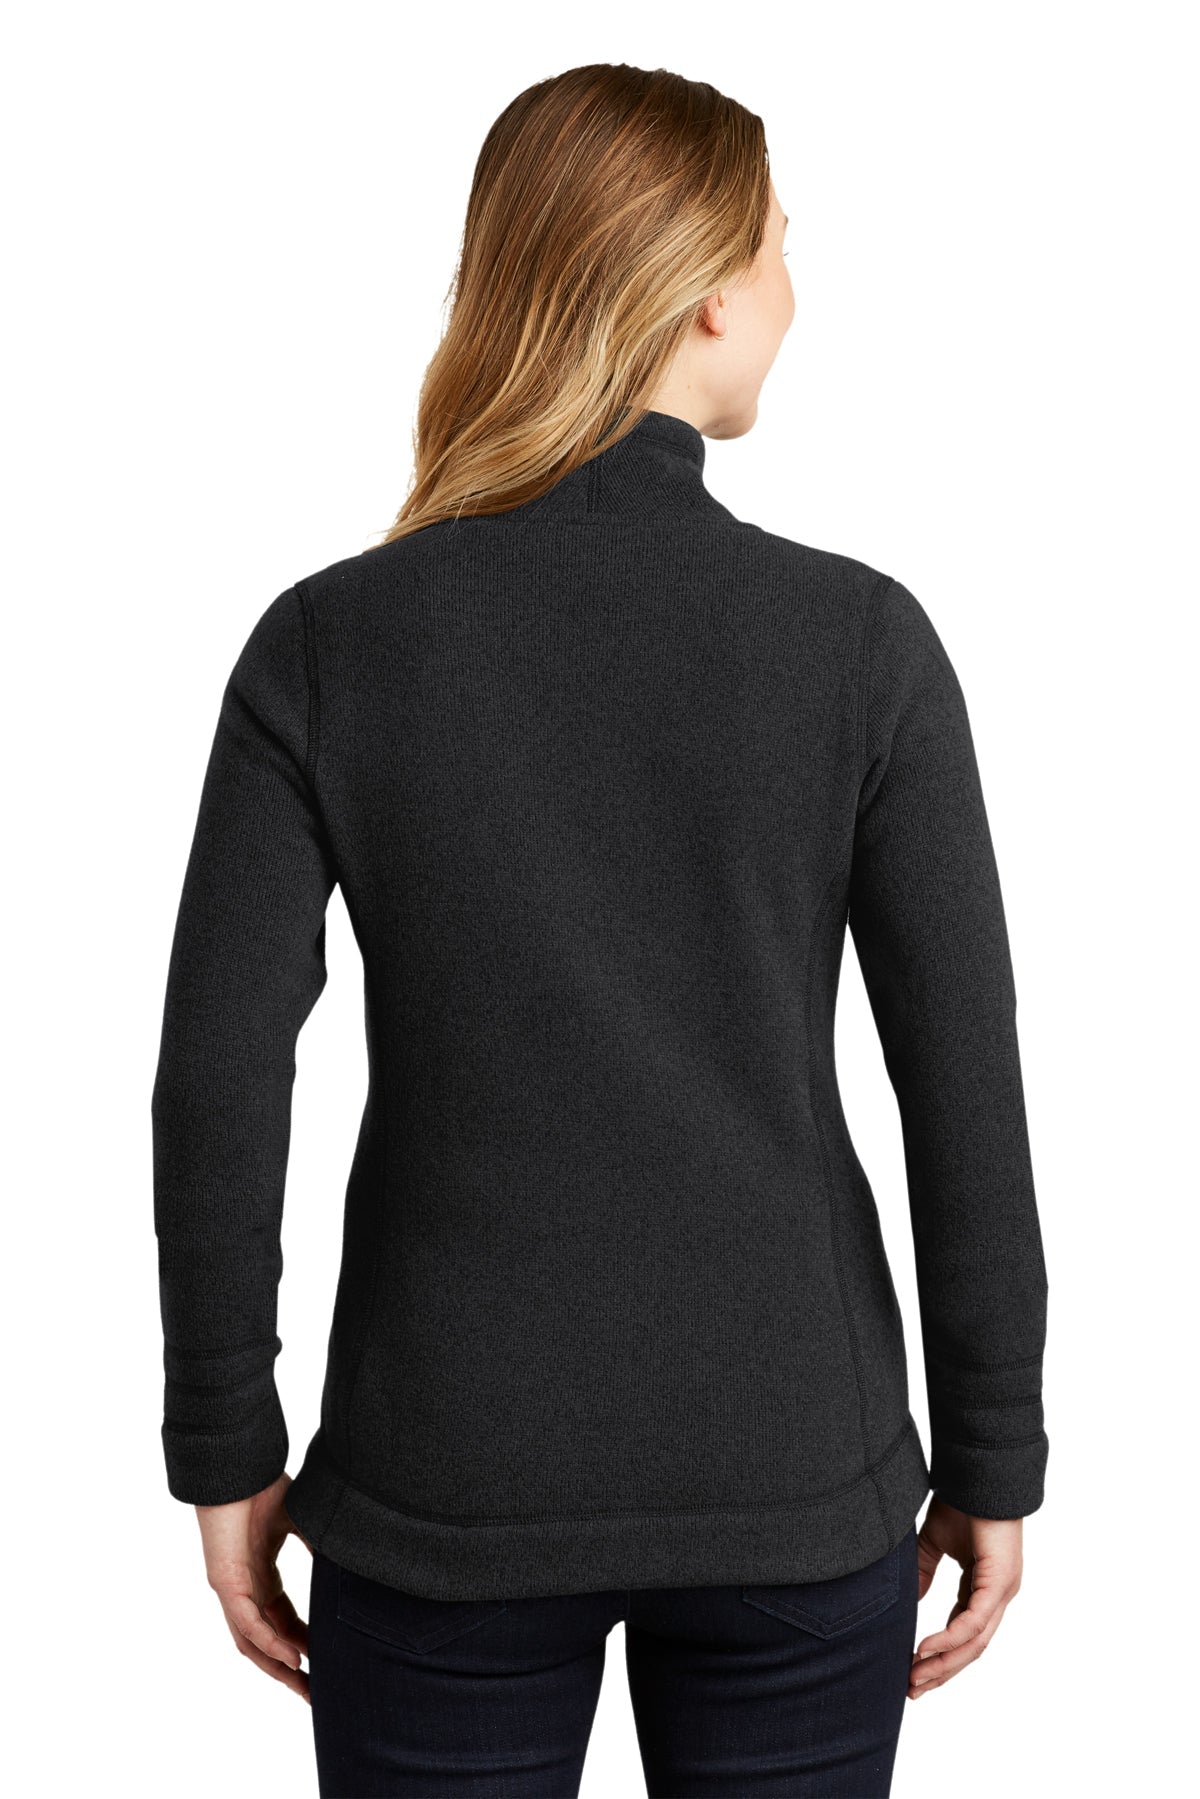 North Face Ladies Sweater Fleece Jacket TNF Black Heather